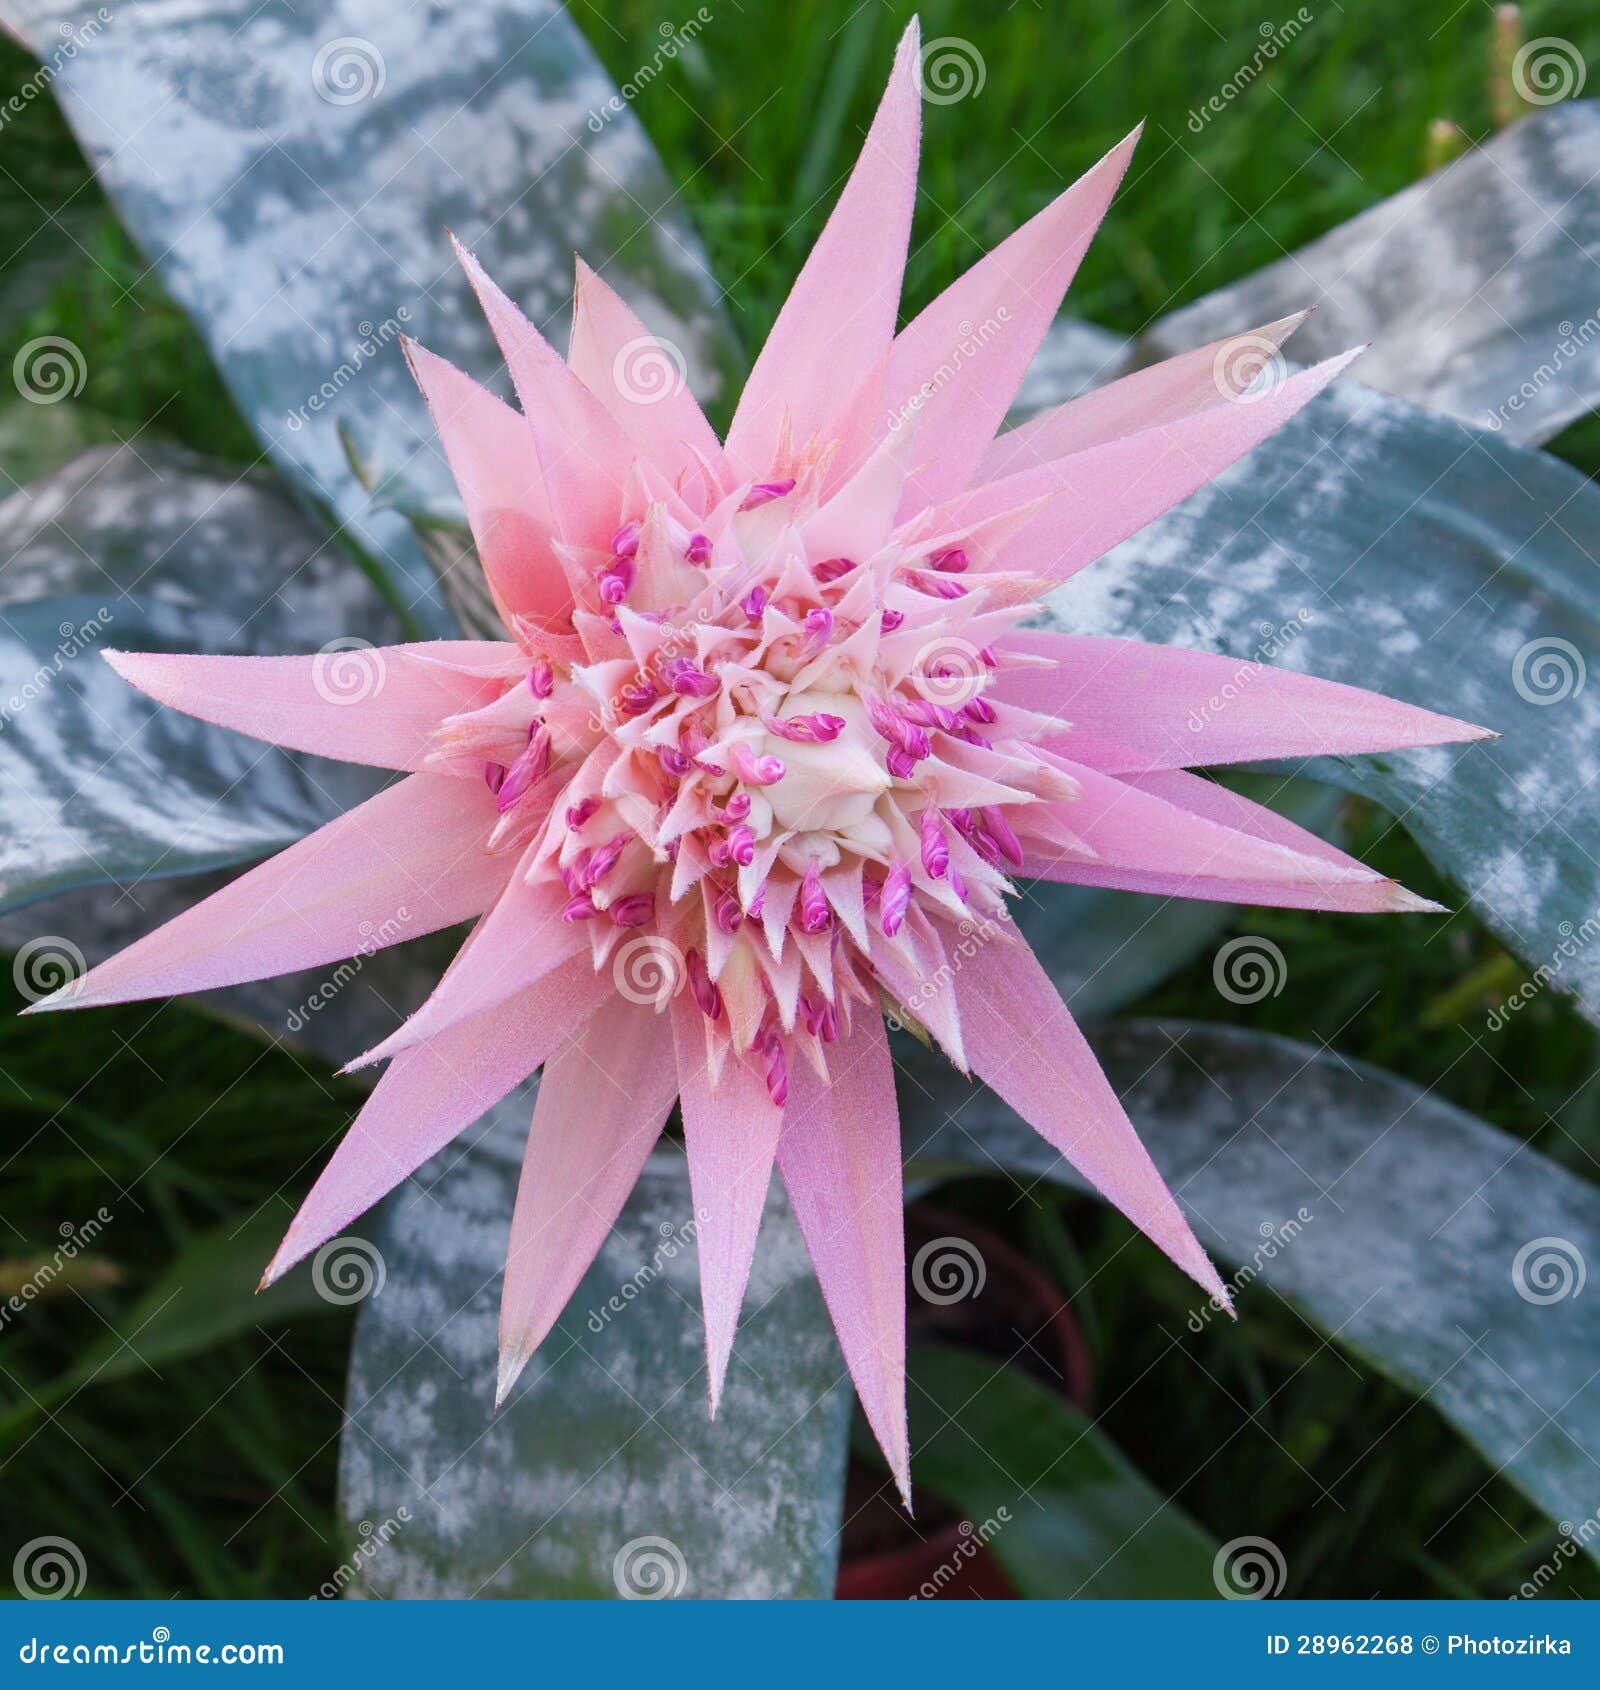 Aechmea Fasciata Bromeliad Flower Stock Photo - Image of flower, close:  28962268